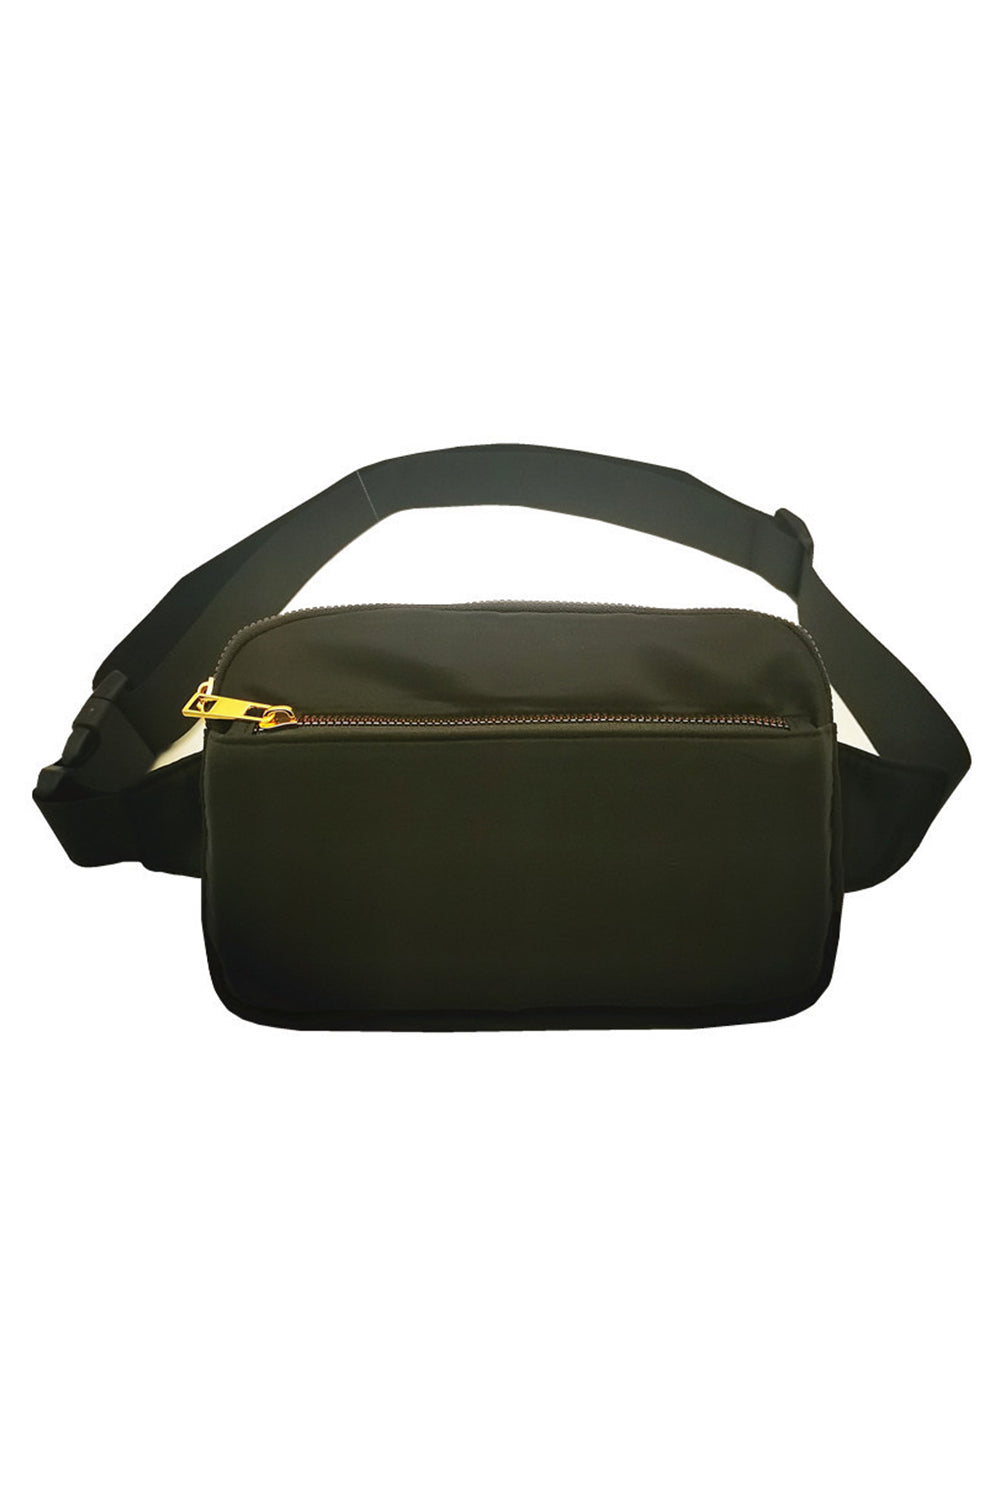 Black Oxford Cloth Large Capacity Portable Multi Pocket Chest Bag